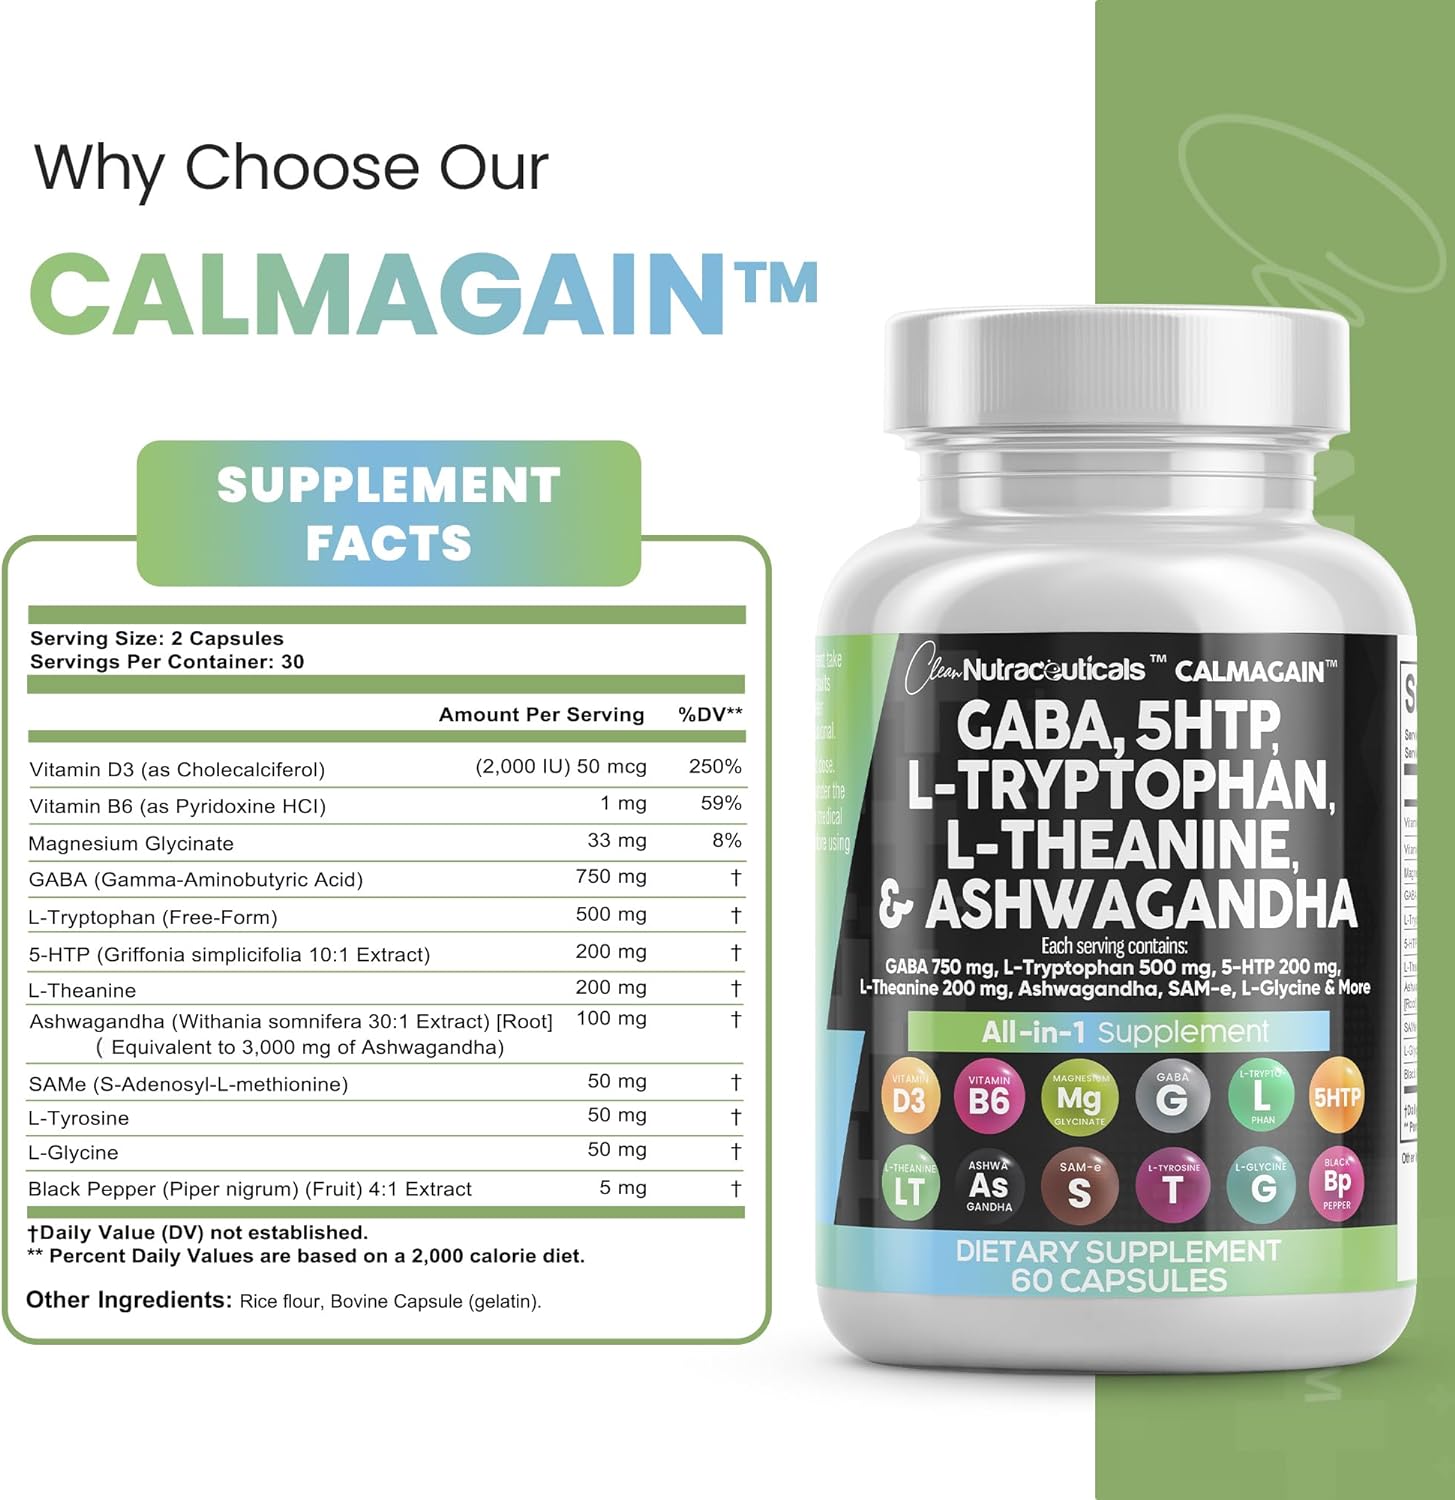 CalmAgain All in 1 5 HTP Supplement